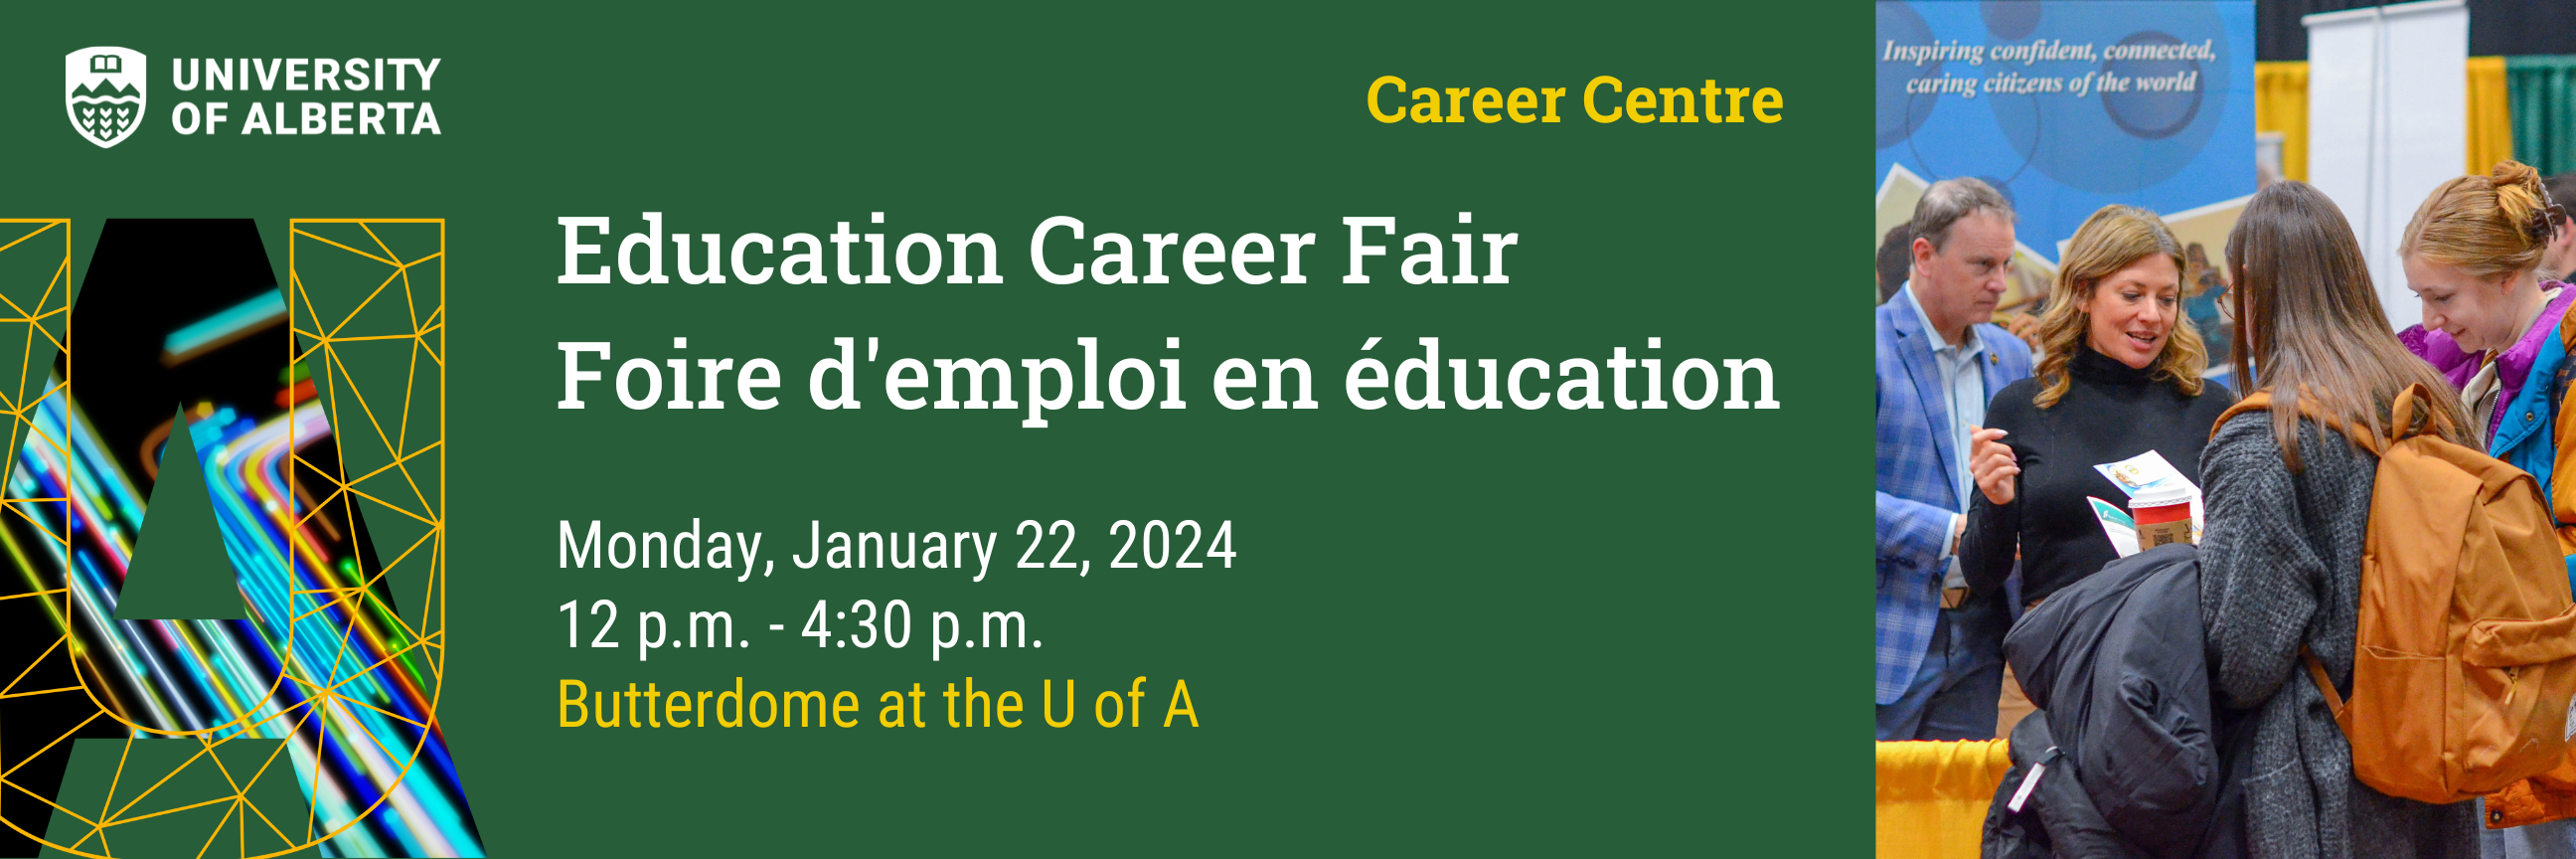 Education Career Fair / Foire d'emploi en éducation - Monday, January 22, 2024 12 p.m. to 4:30 p.m., Butterdome at the U of A